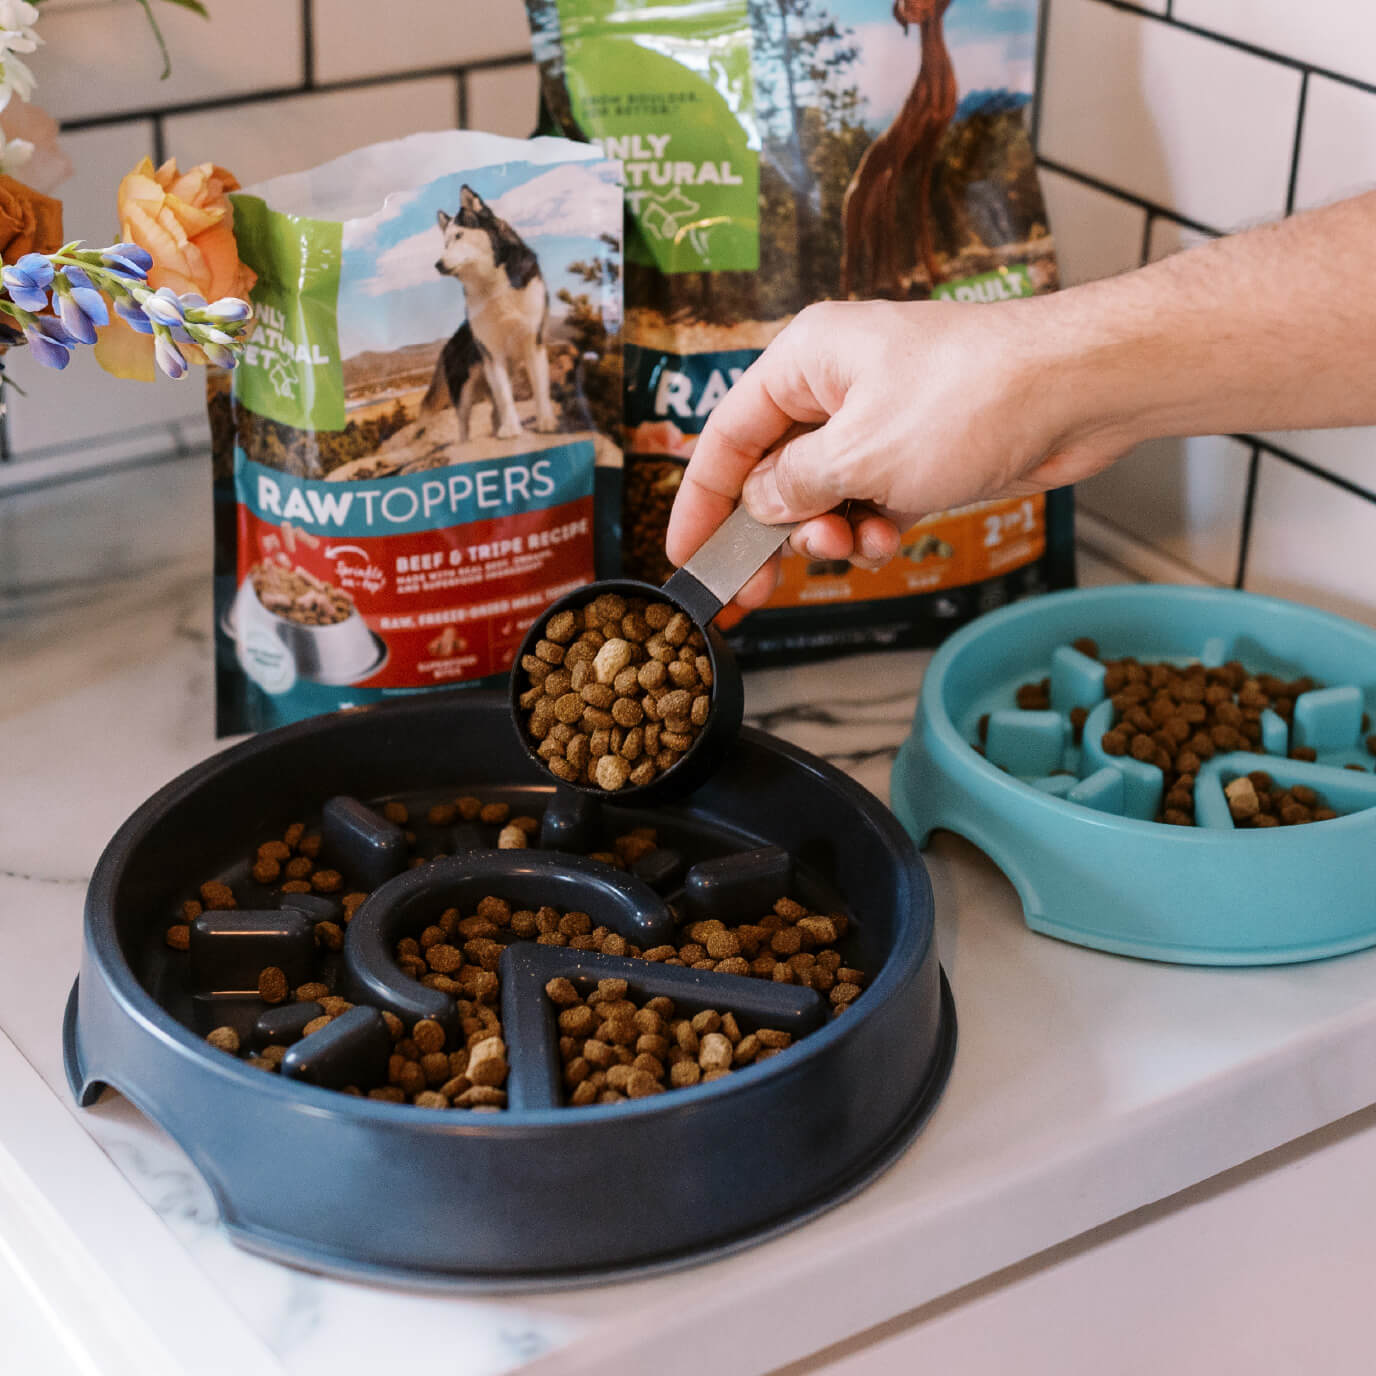 Benepaw Slow Feeder Dog Bowl Nontoxic Removable Pet Slow Eat Dish